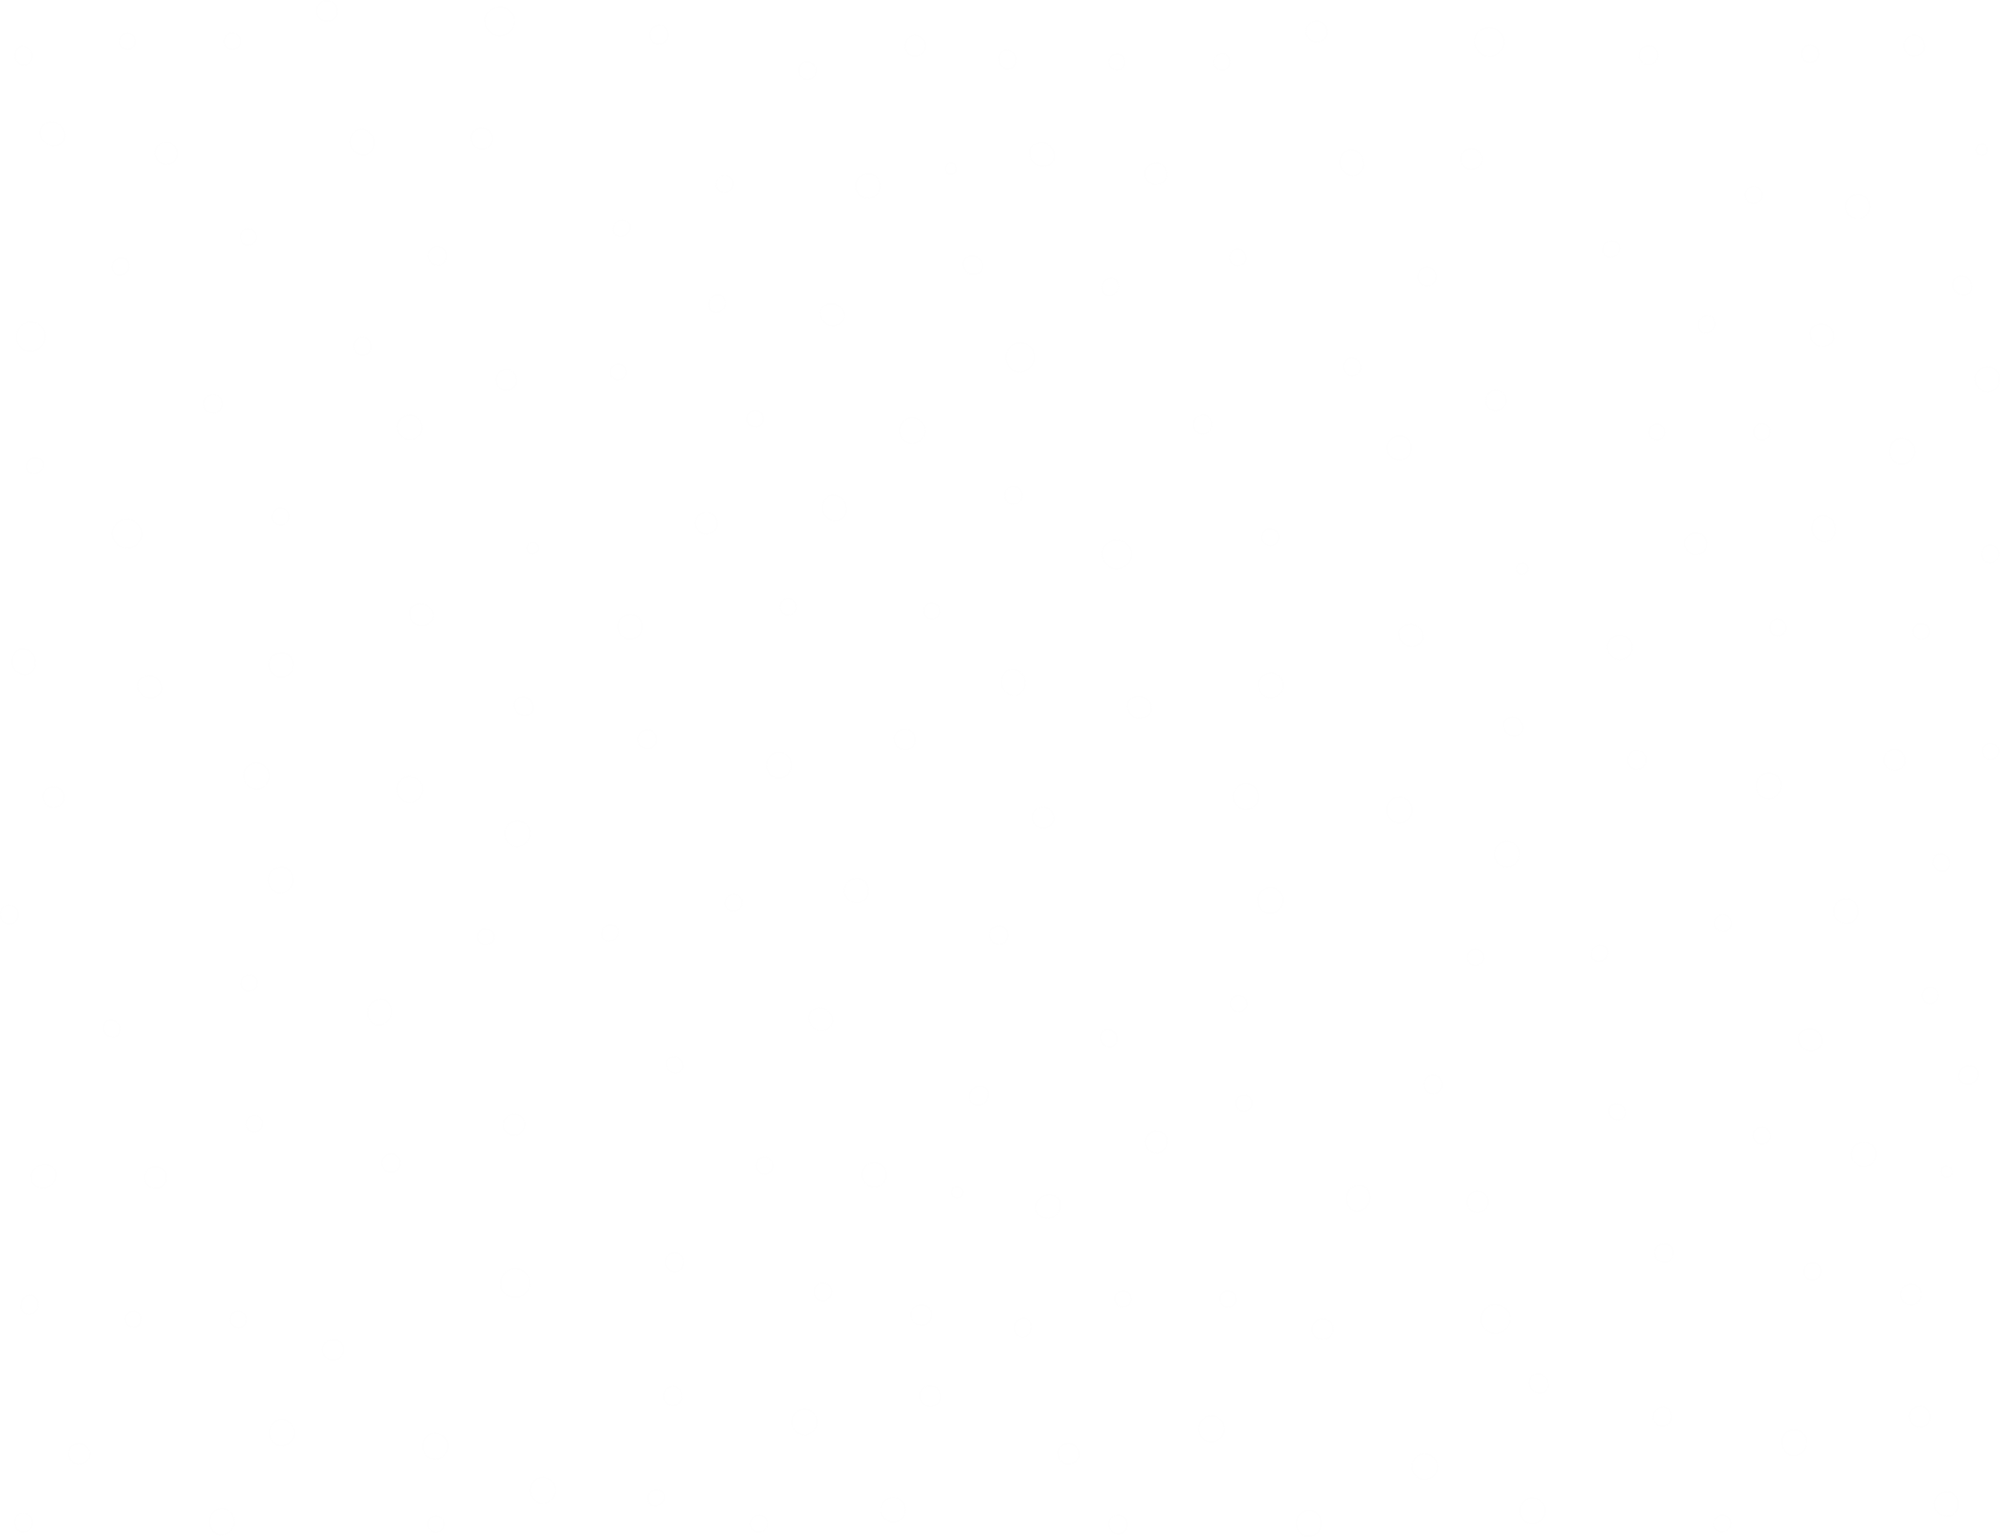 Backgrounds - Random Snowflakes - White